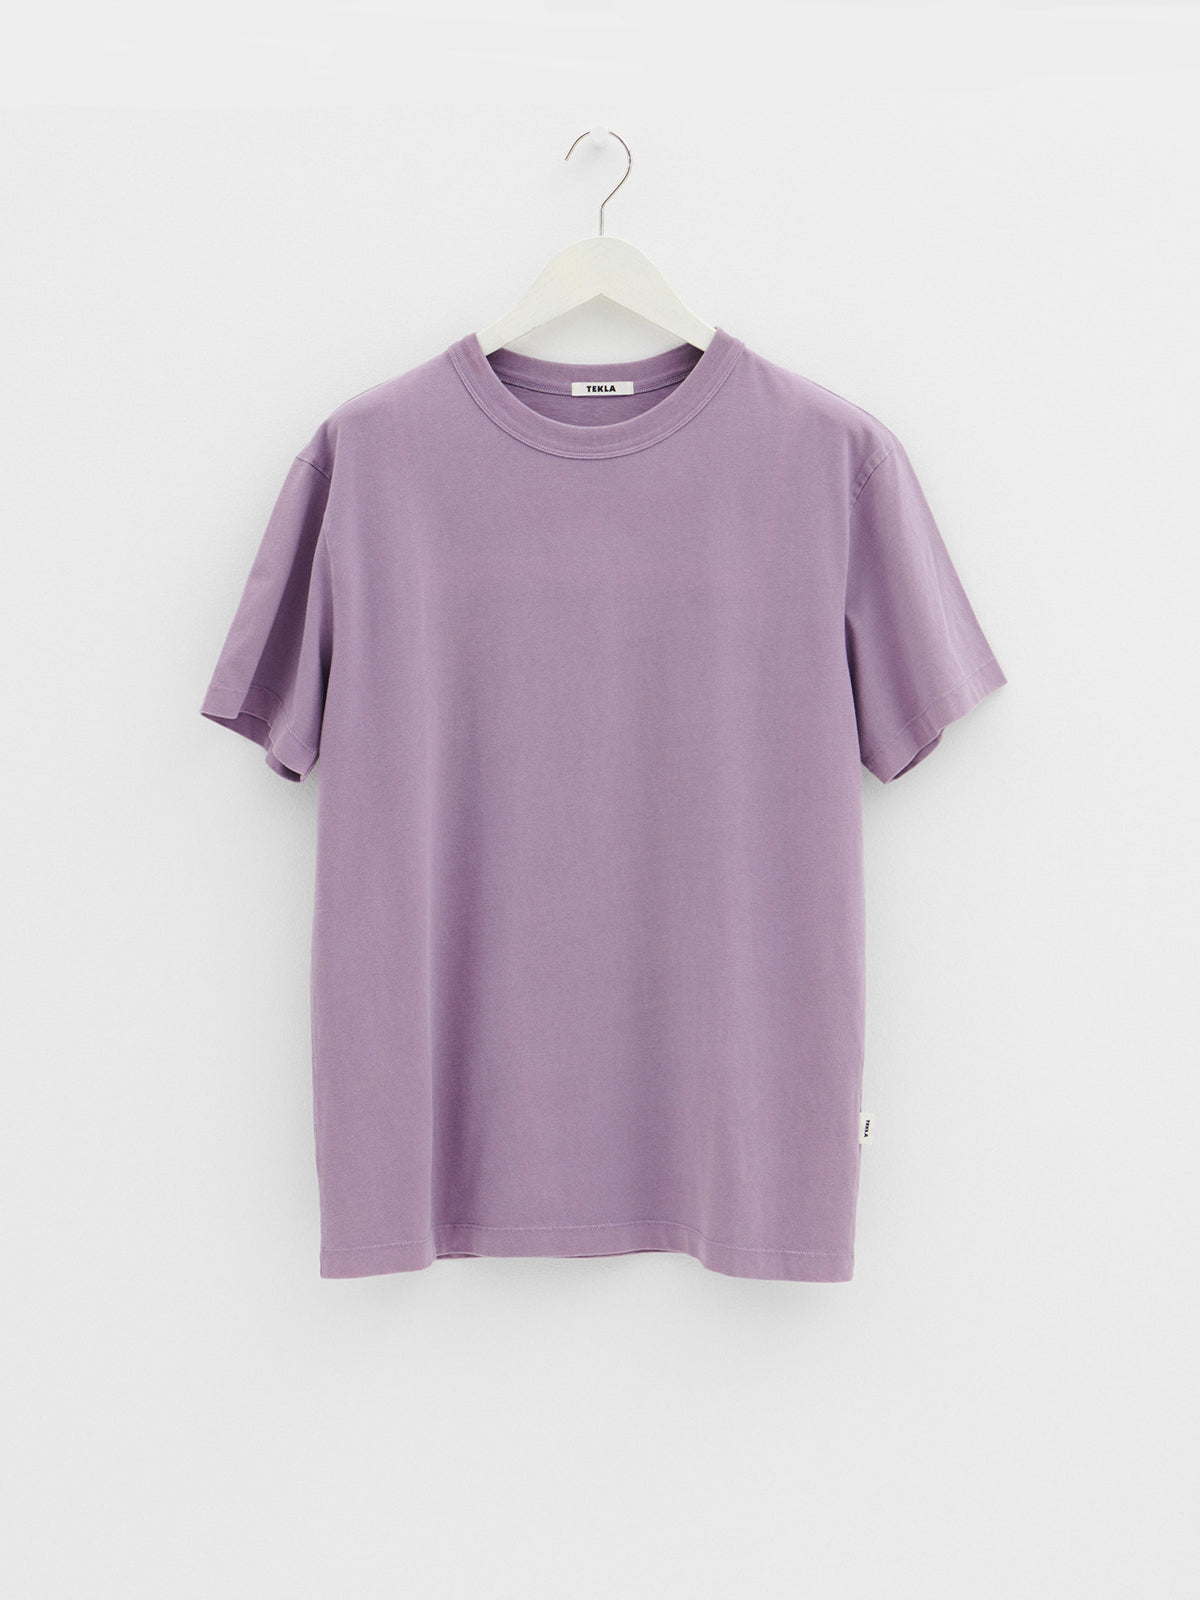 Sleeping T-Shirt in Purple